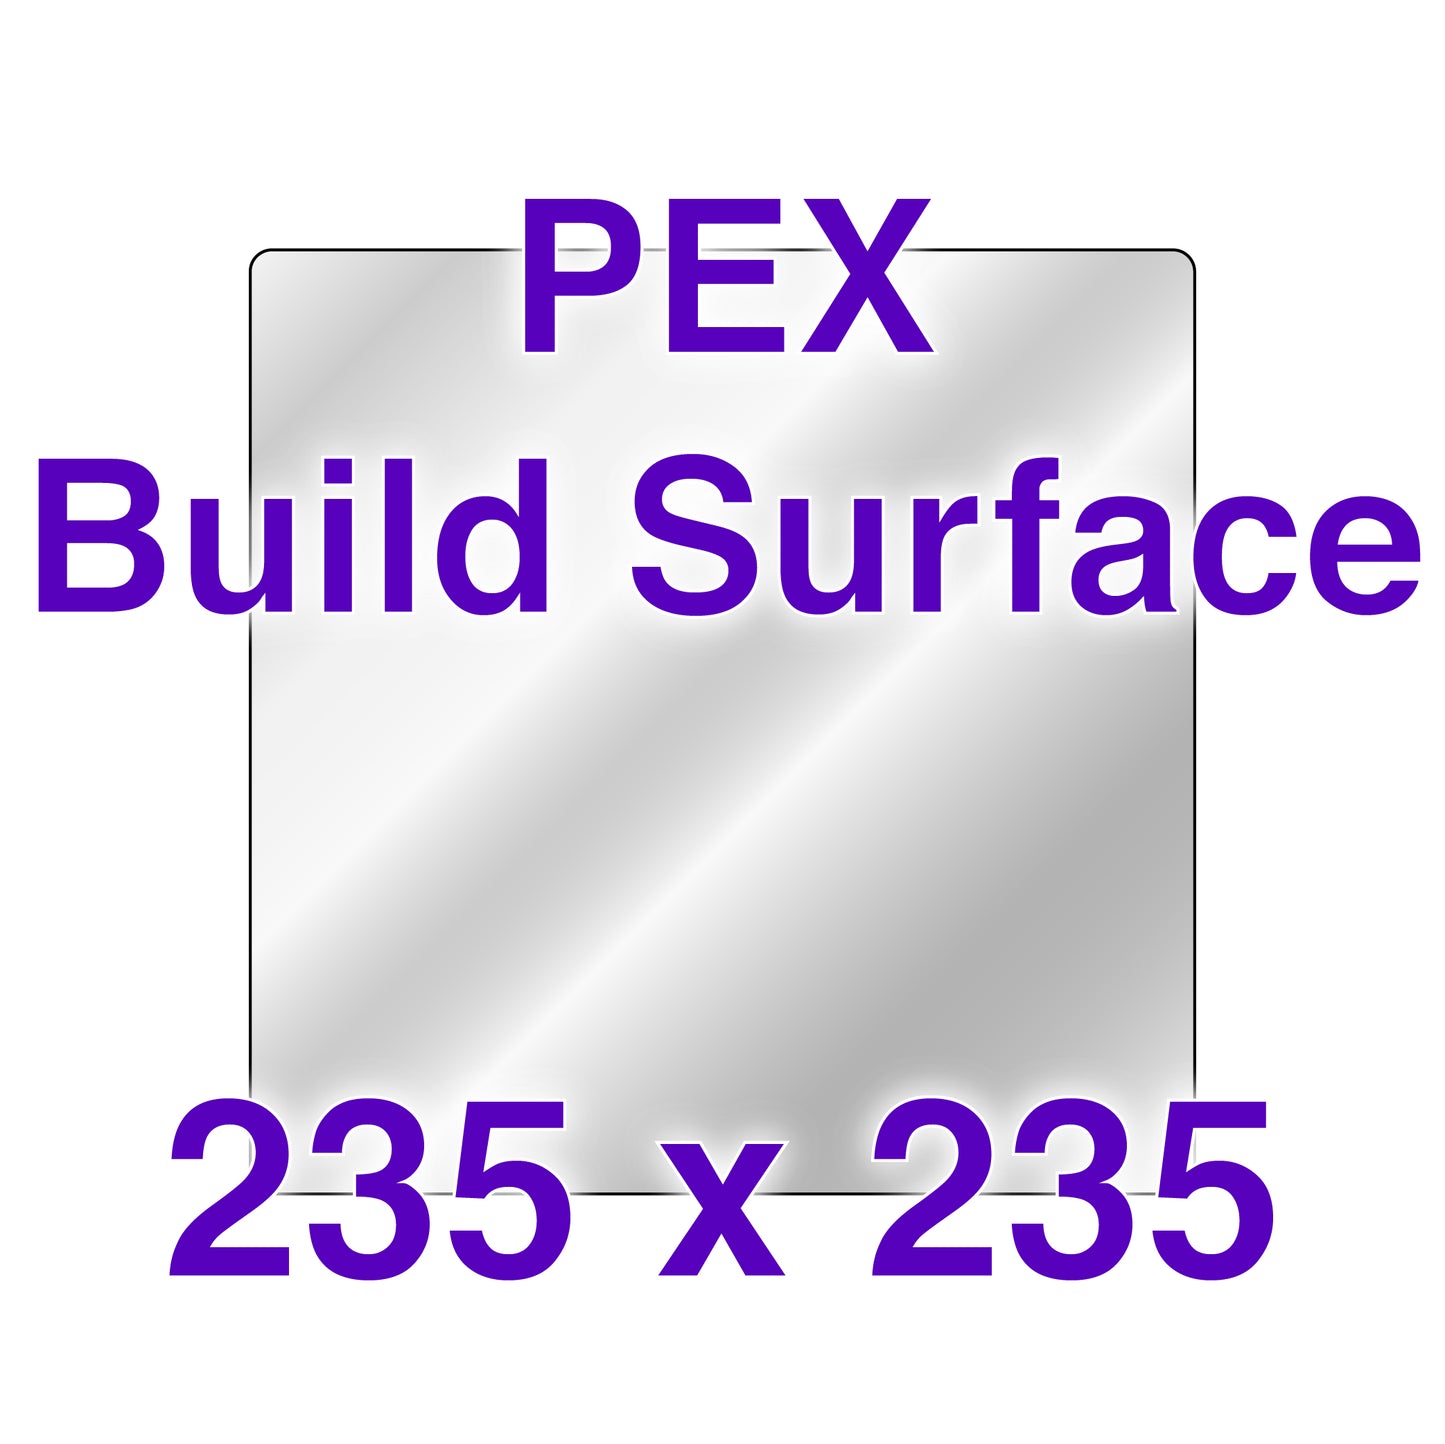 PEX Build Surface - 235 x 235 - Creality Ender 3 & 5,  BIQU B1, Elegoo Neptune 2/3